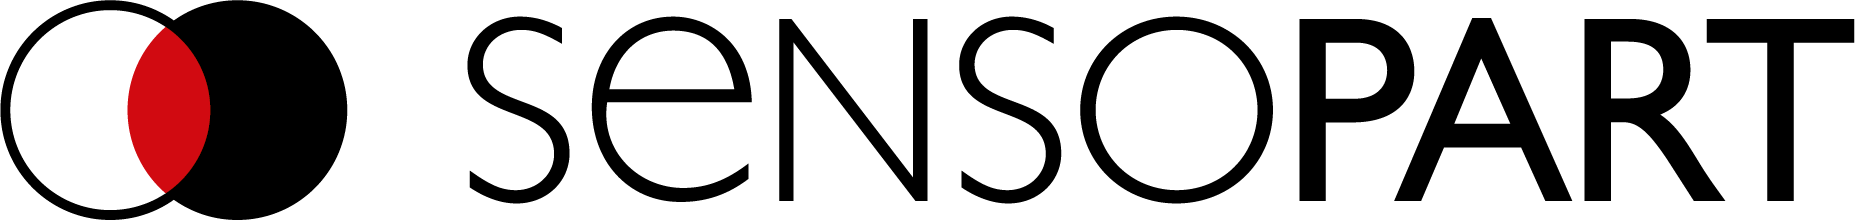 SENSOPART Logo